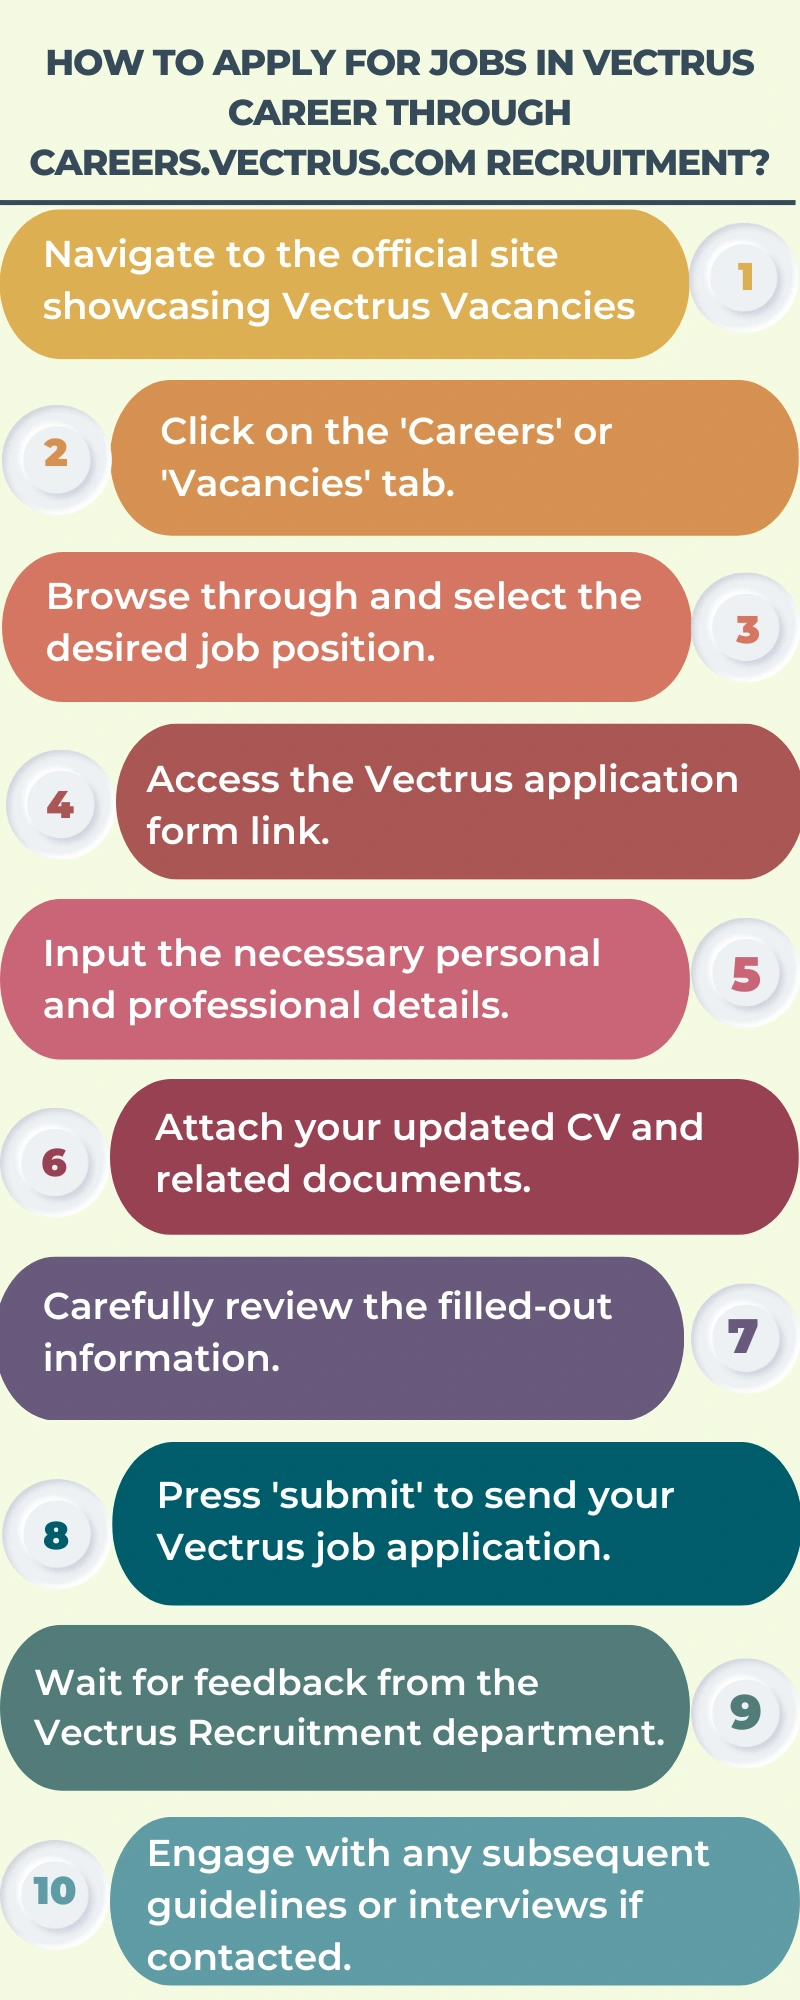 How to Apply for Jobs in Vectrus Career through careers.vectrus.com recruitment?